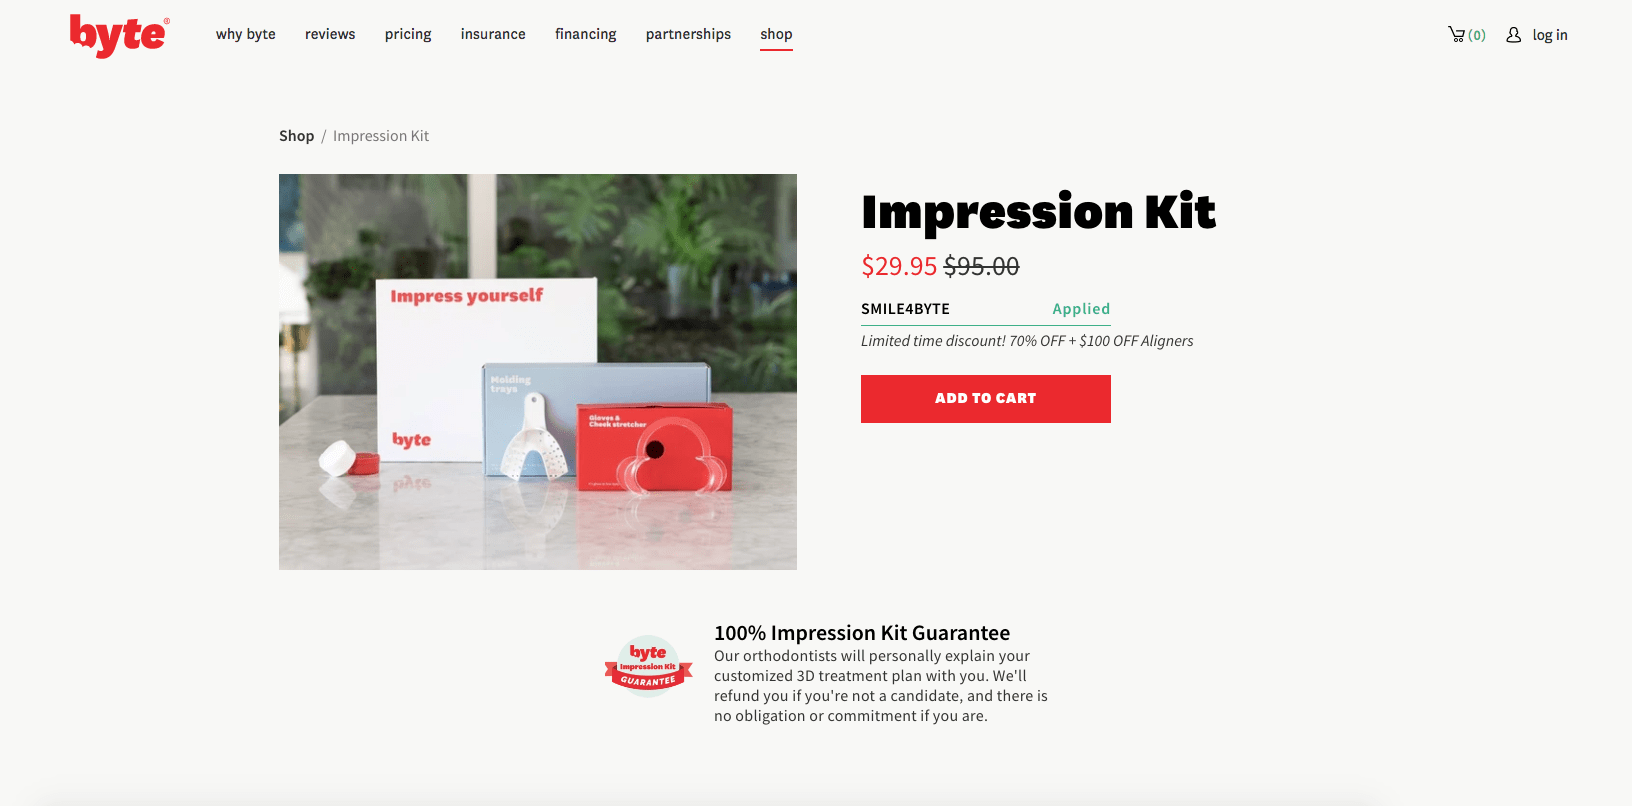 Byte webpage to purchase impression kit